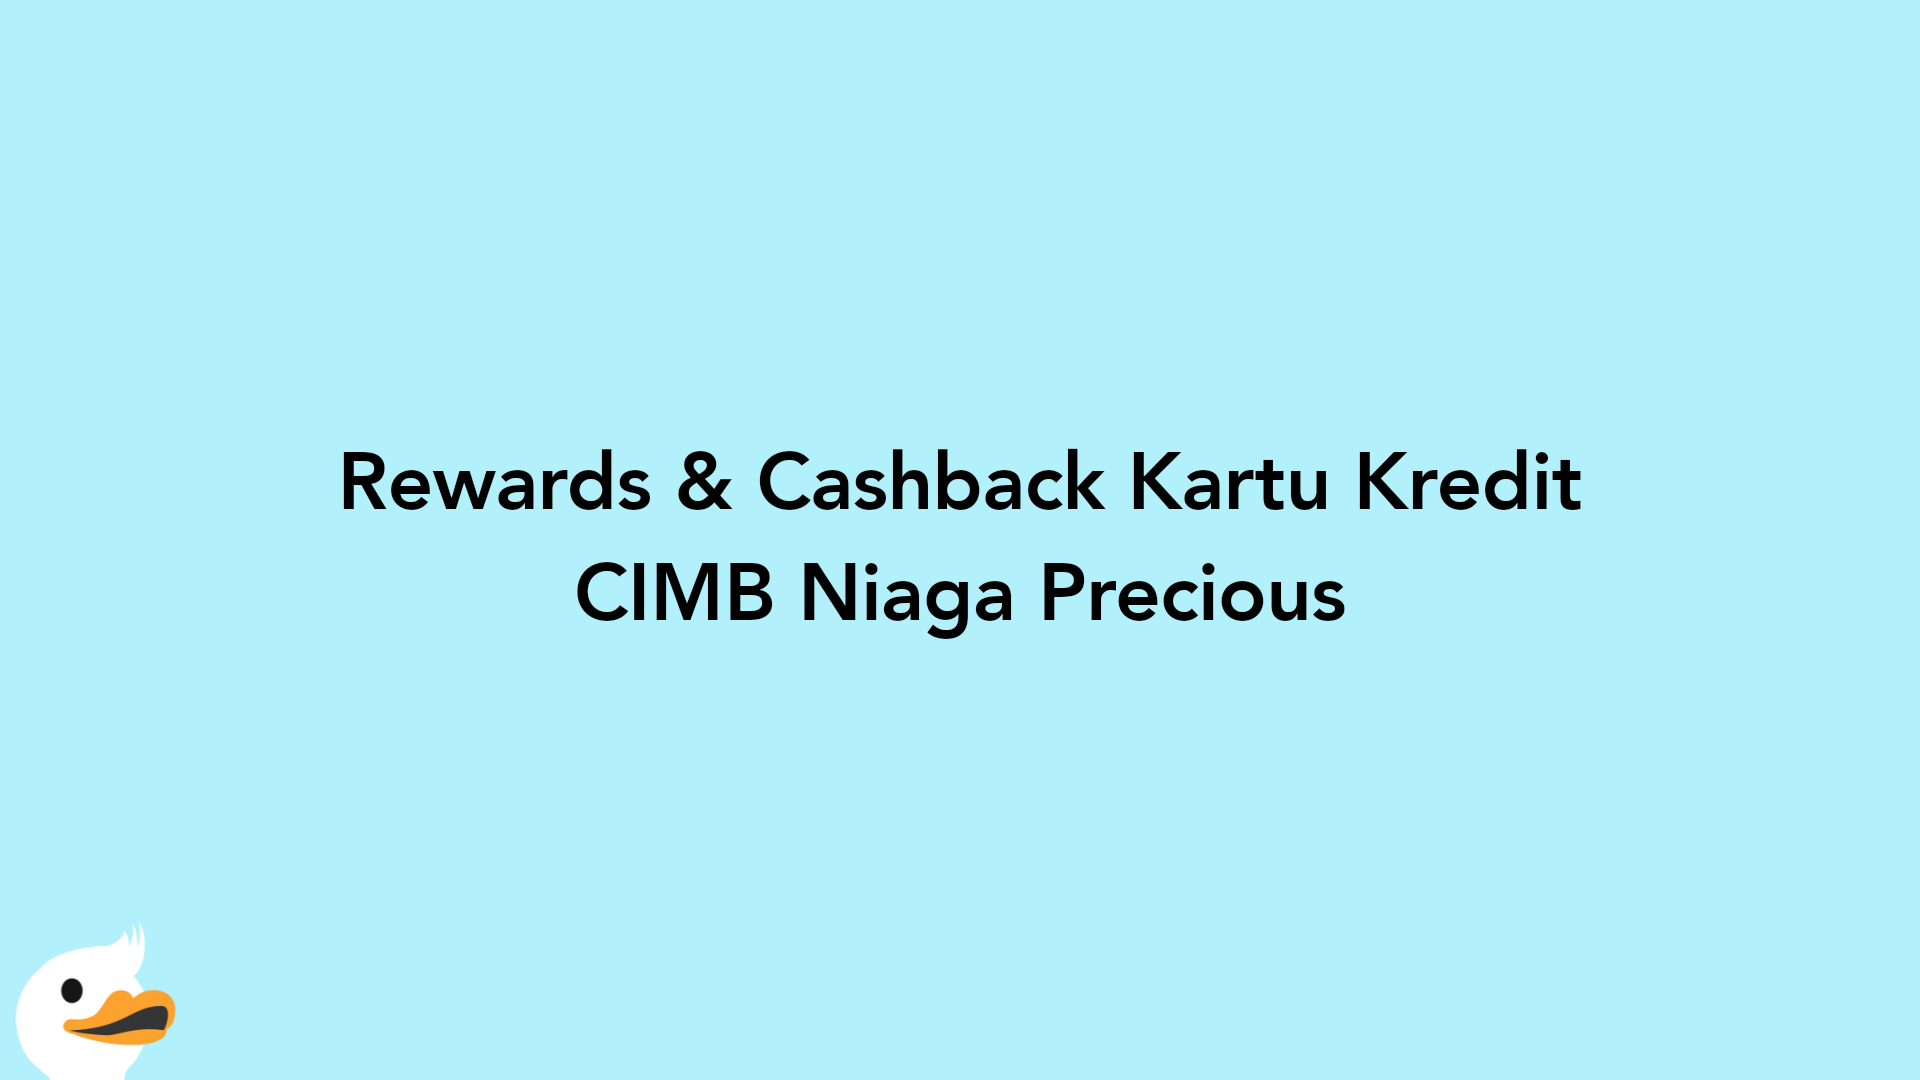 Rewards & Cashback Kartu Kredit CIMB Niaga Precious